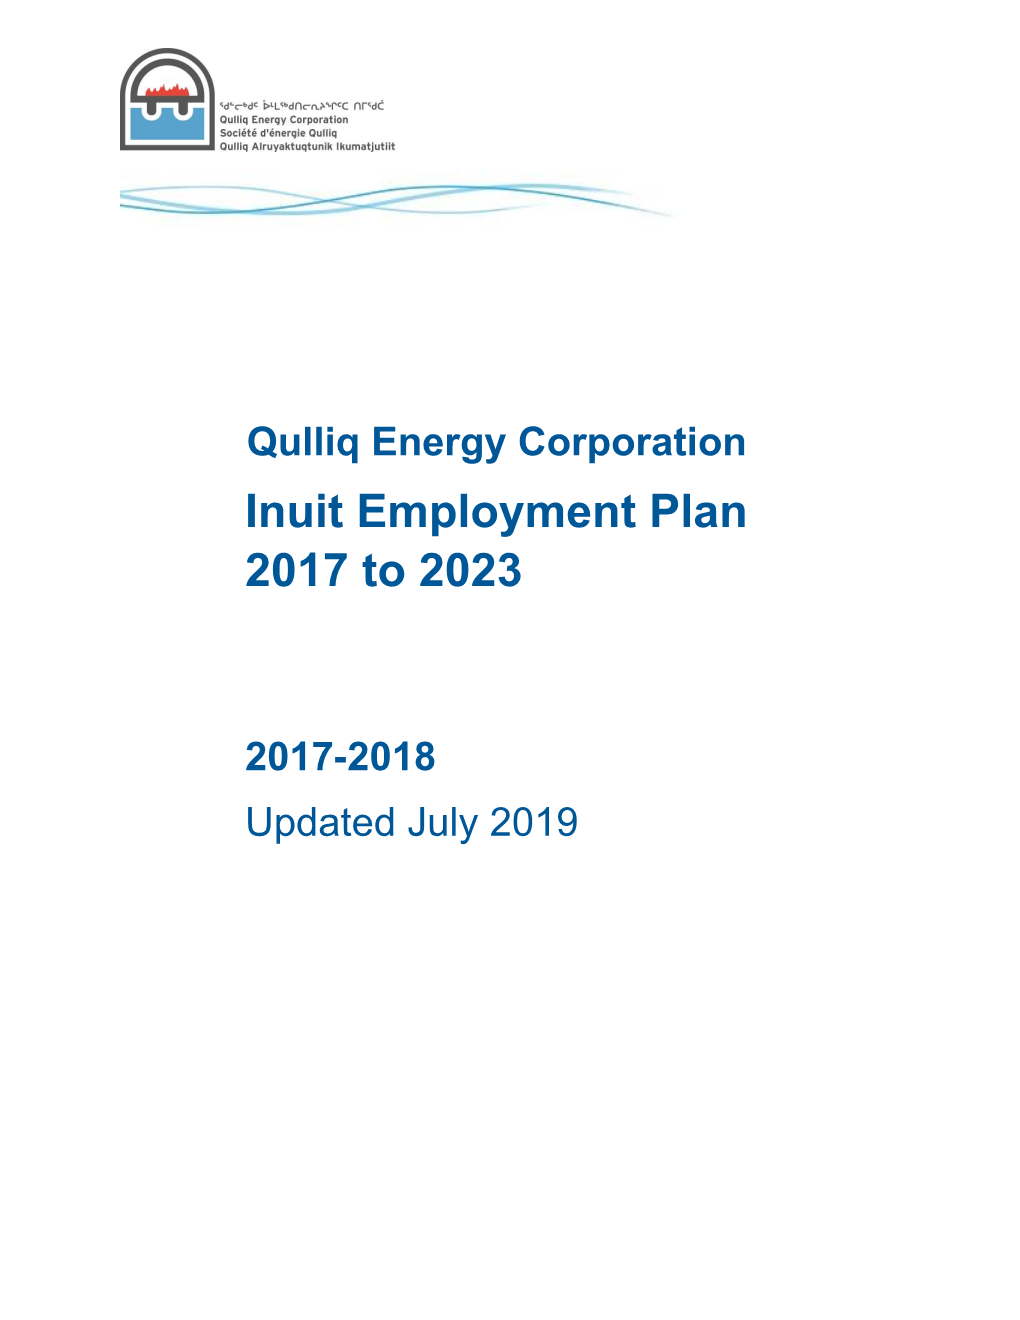 Qulliq Energy Corporation Inuit Employment Plan 2017 to 2023